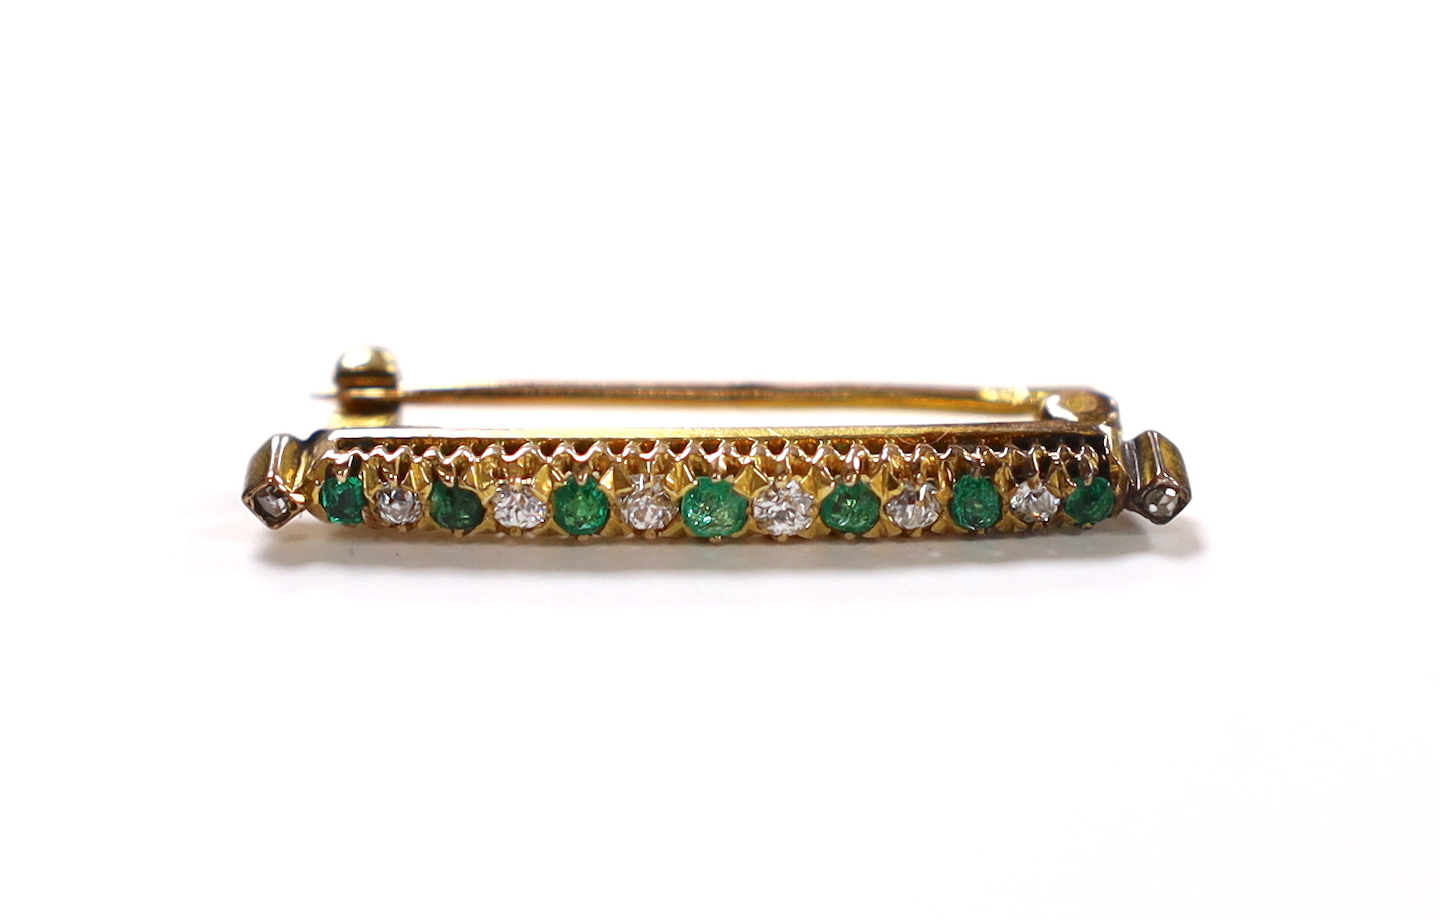 A yellow metal, seven stone emerald and eight stone diamond chip set bar brooch, 32mm, gross weight 2.9 grams.